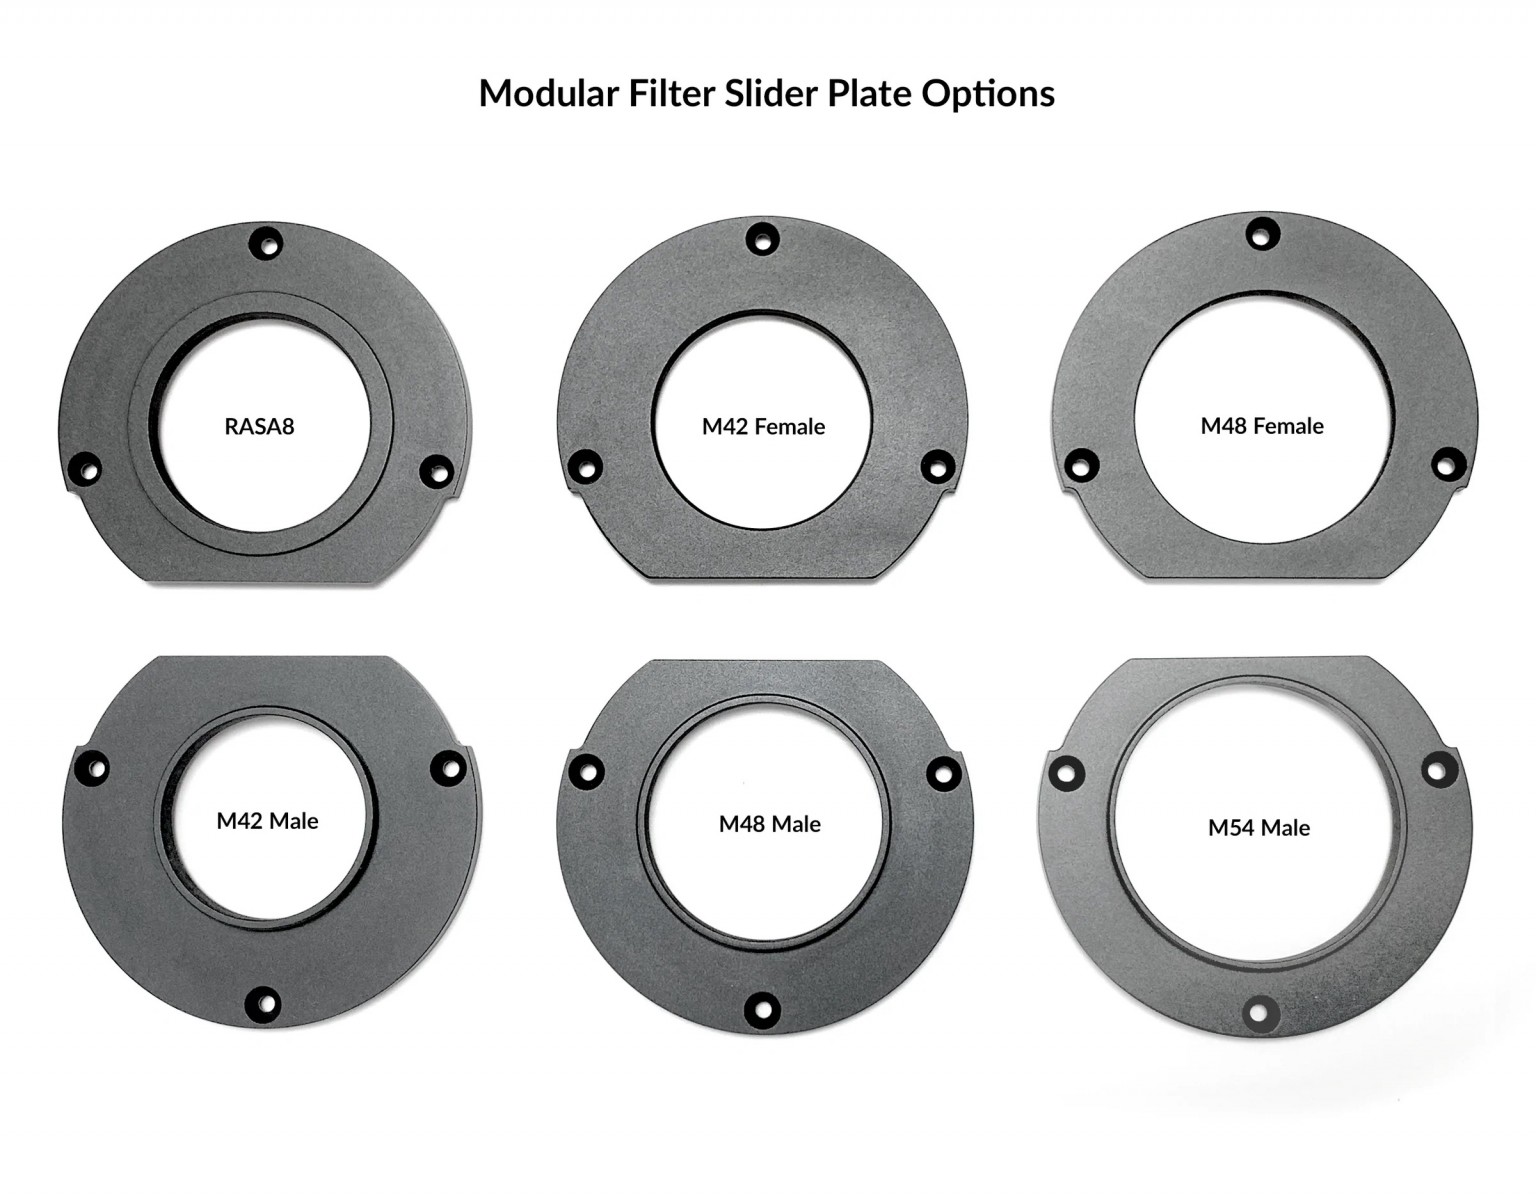 Starizona Modular Filter Slider Plate (M54 Male)